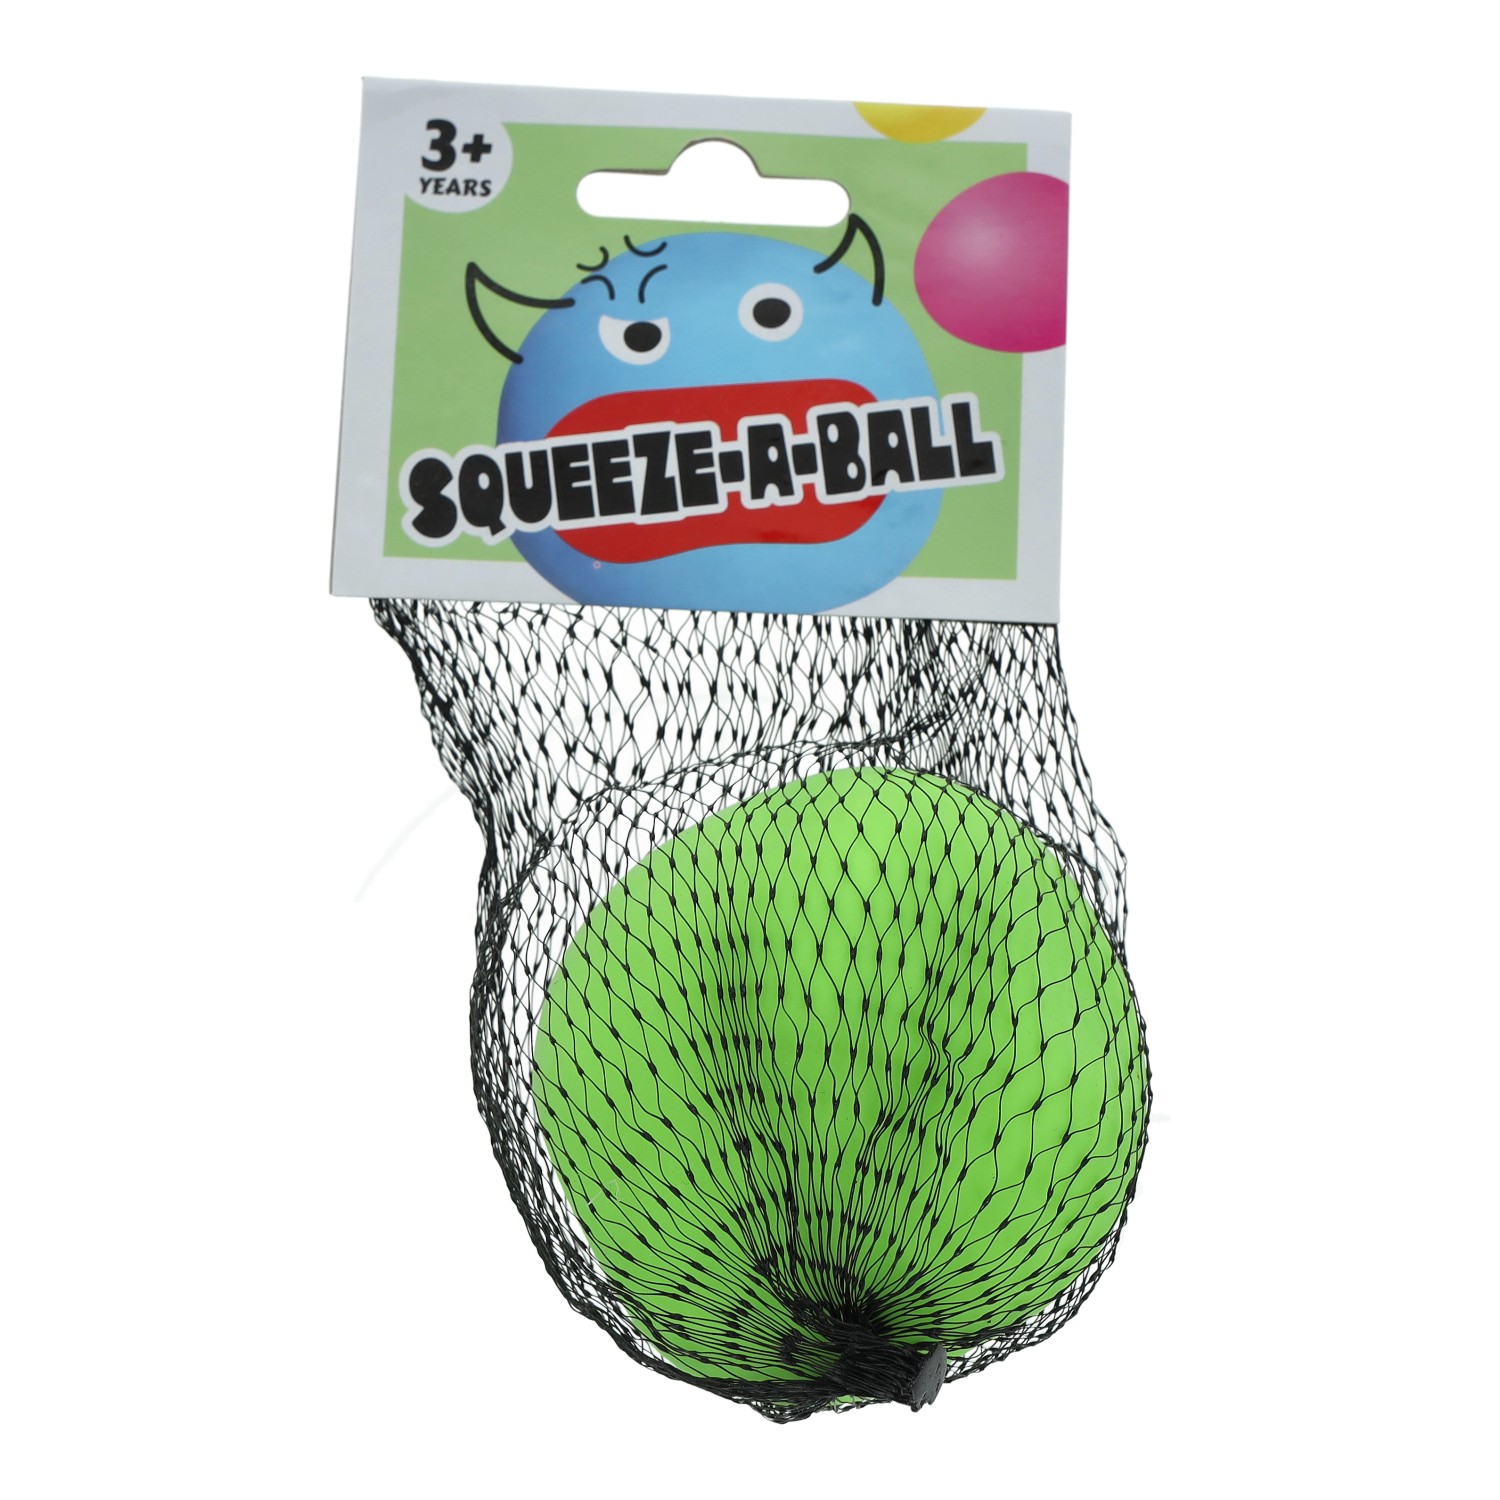 Squeez-A-Ball